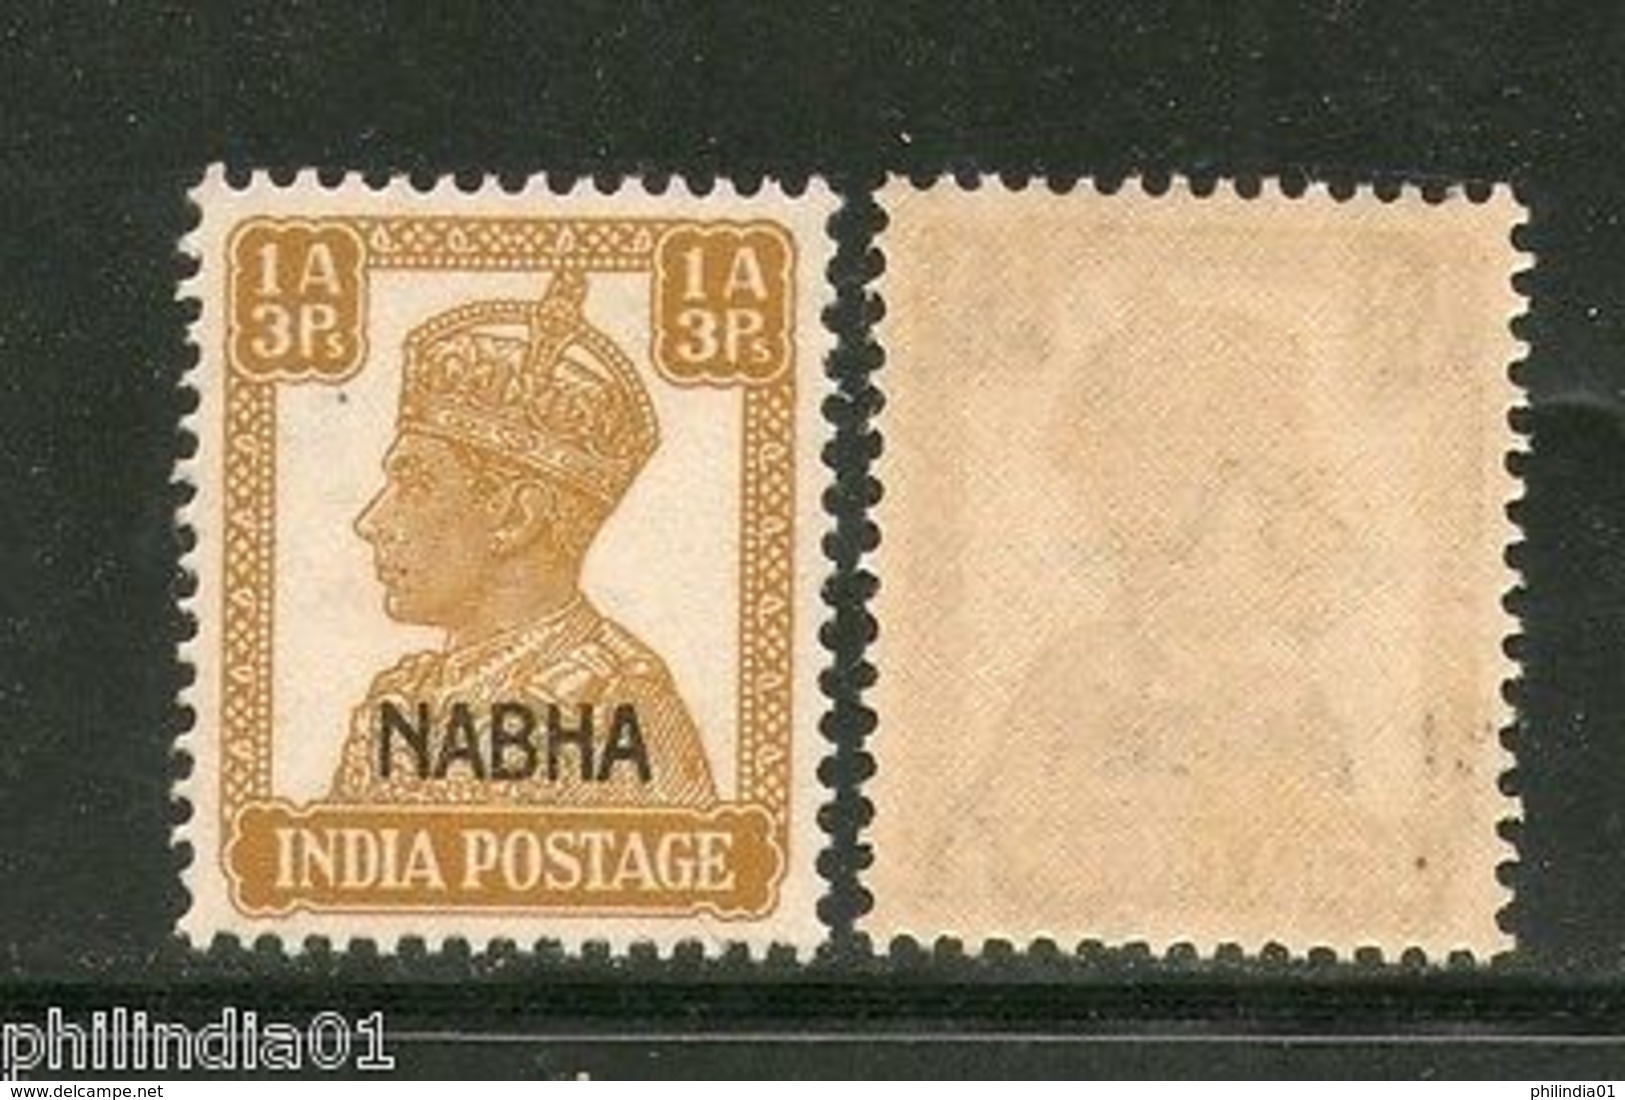 India NABHA State KG VI 1A3p SG 109 / Sc 104 MNH Fine - Nabha